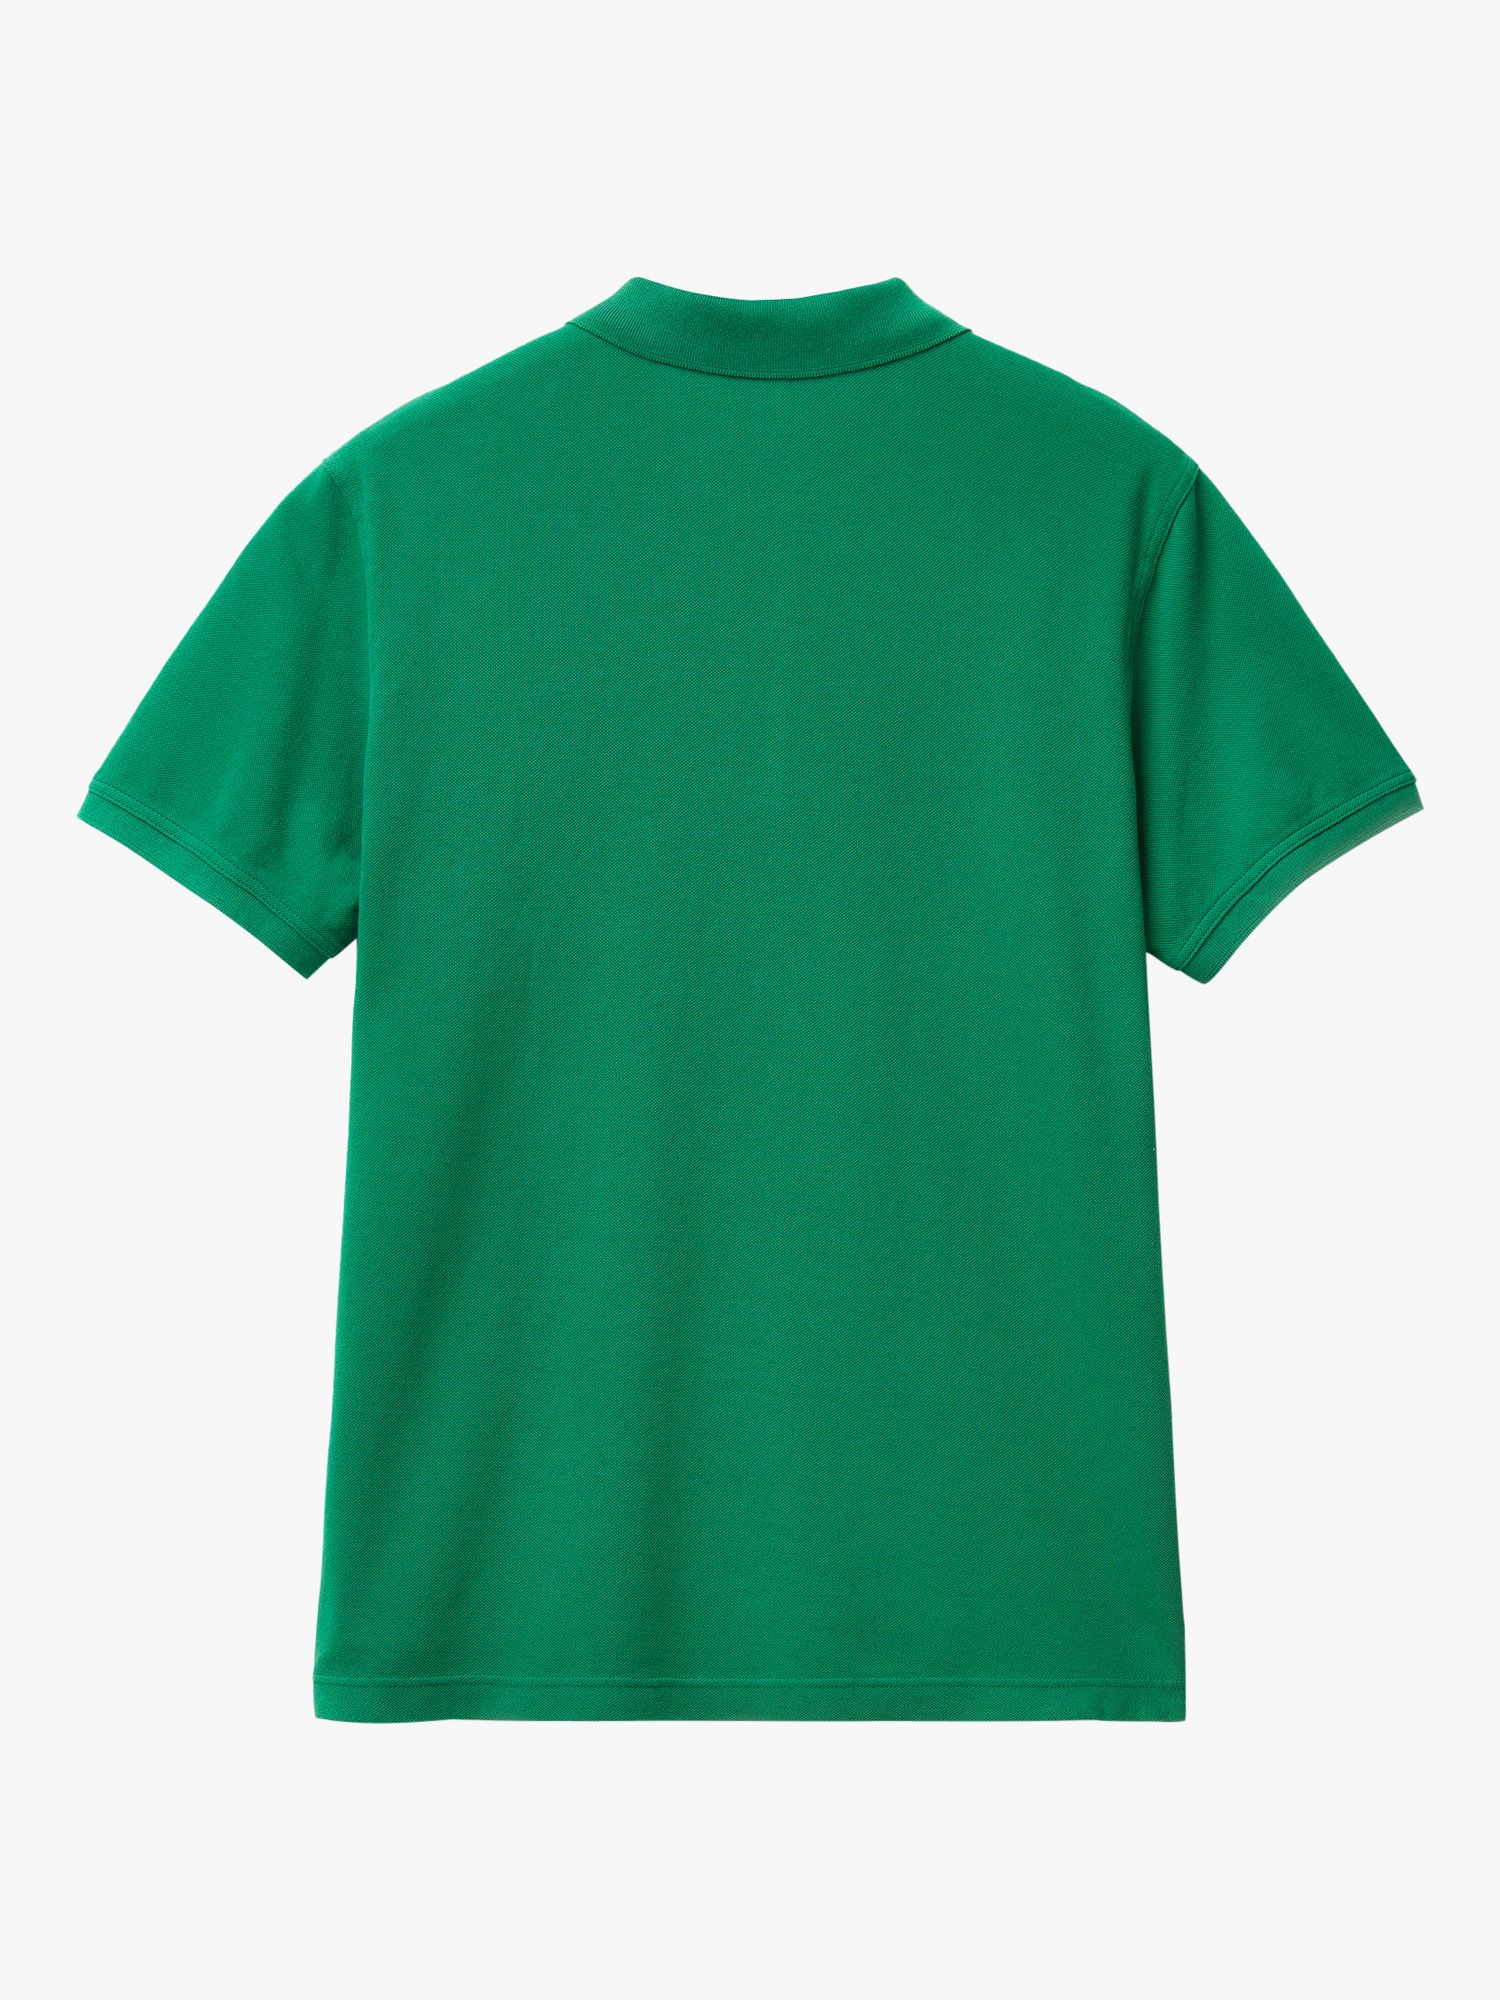 Benetton Short Sleeve Polo Shirt, Emerald Green, M